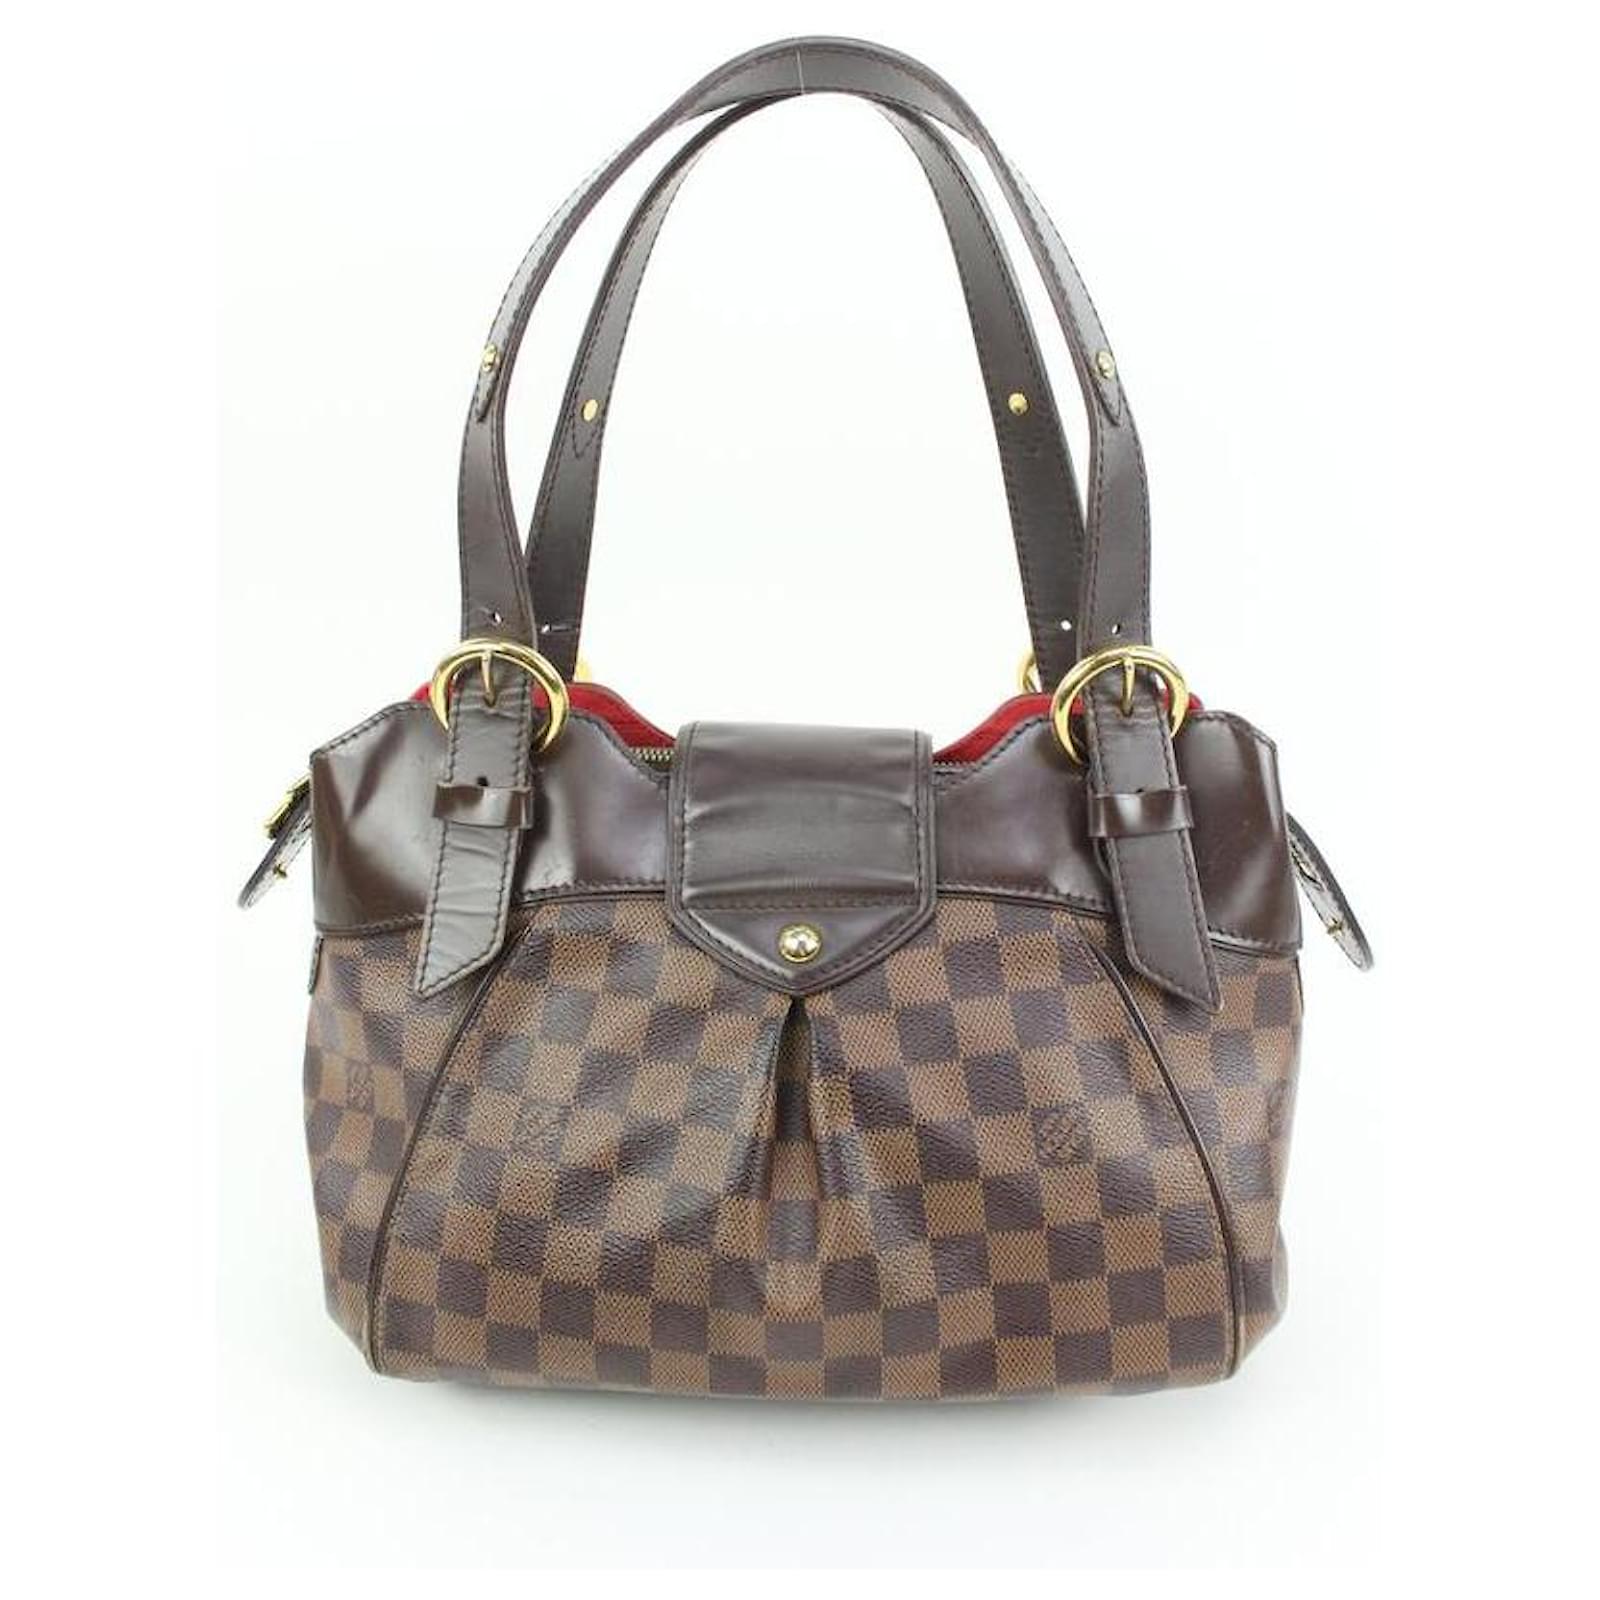 Louis Vuitton Sistina MM Women's Shoulder Bag N41541 Damier Ebene